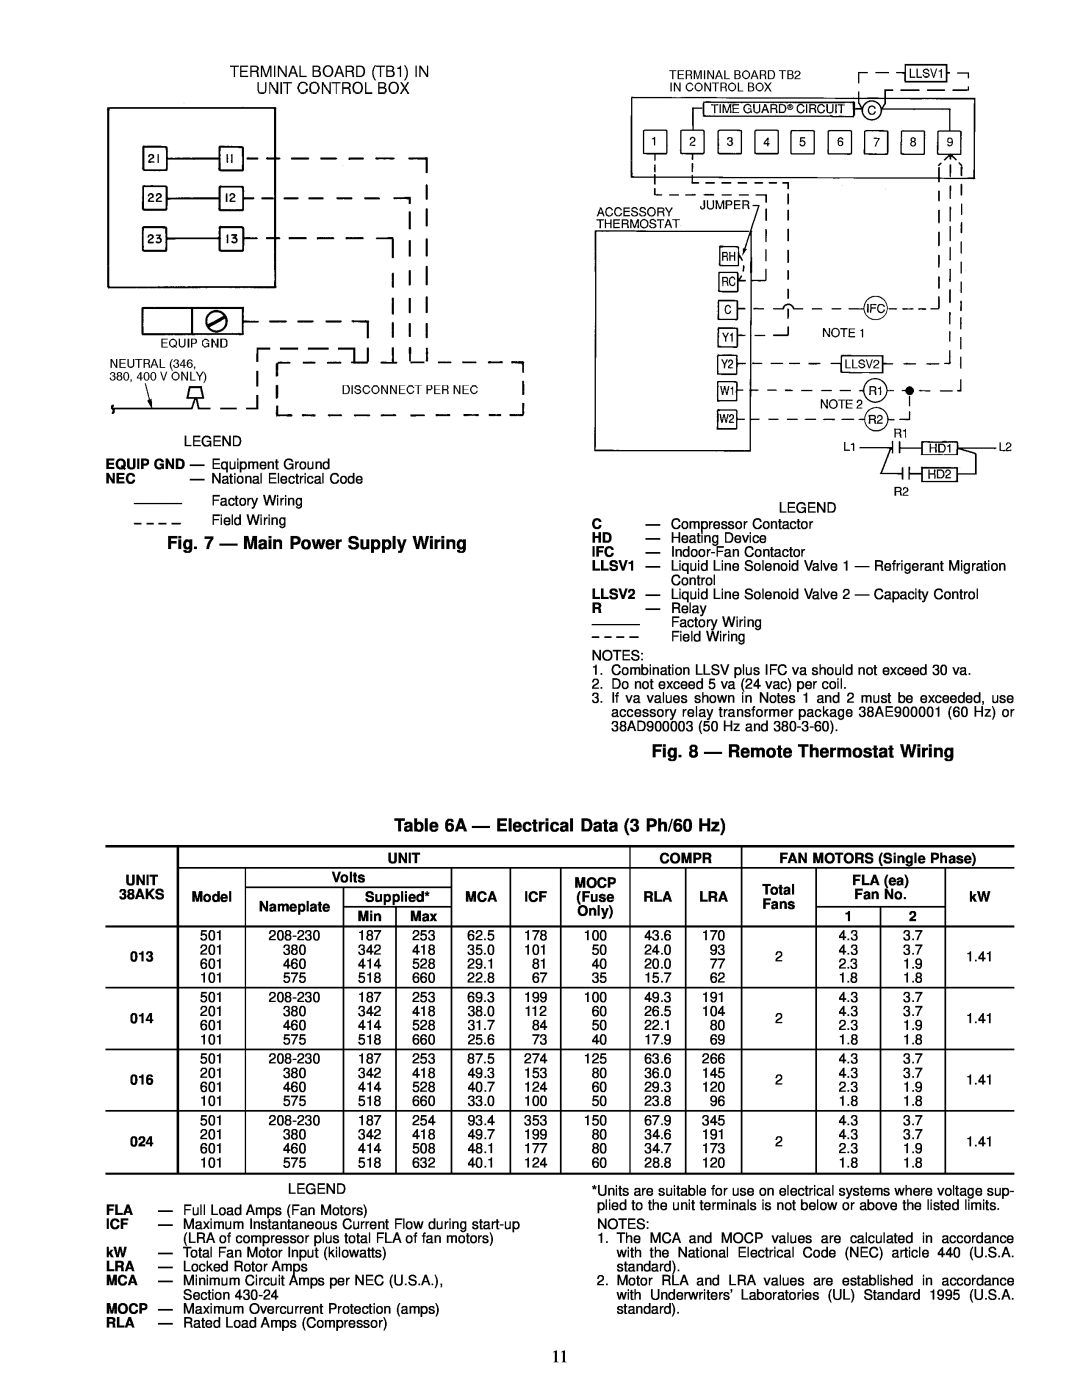 Carrier 38AKS013-024 specifications Ð Main Power Supply Wiring, Ð Remote Thermostat Wiring, A Ð Electrical Data 3 Ph/60 Hz 